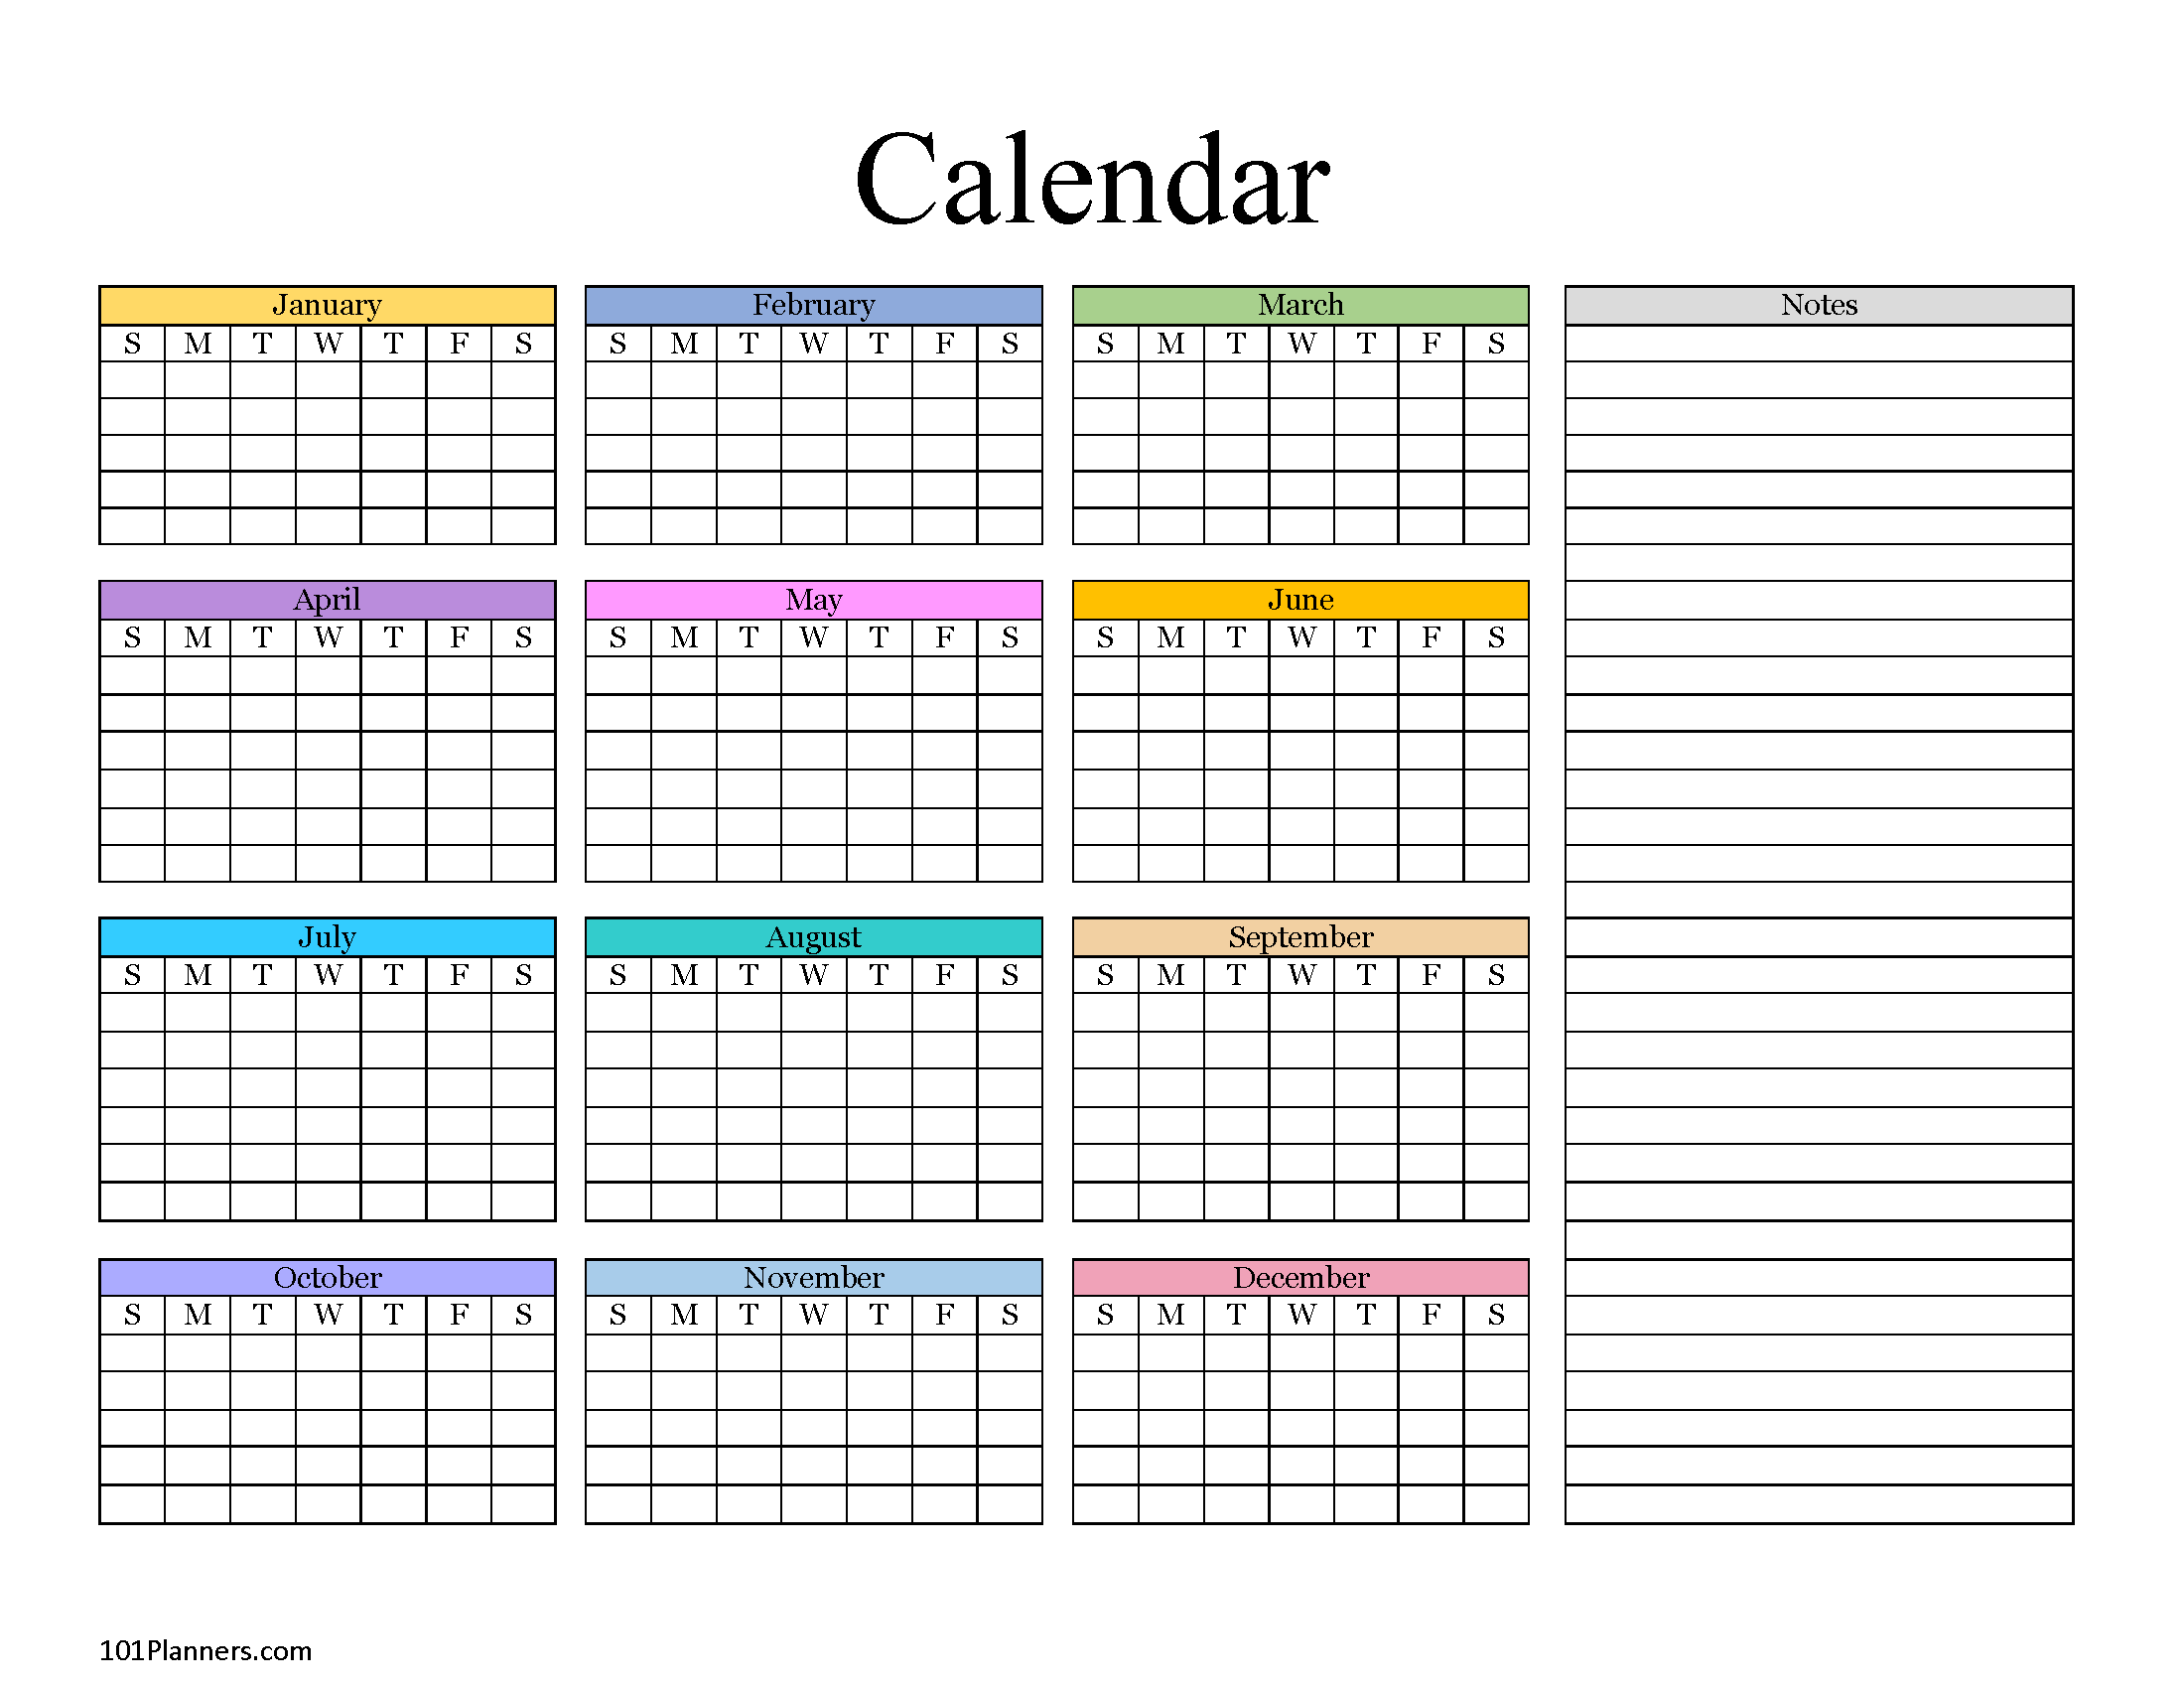 printable-blank-year-calendar-template-by-month-editable-calendar-image-5192165-by